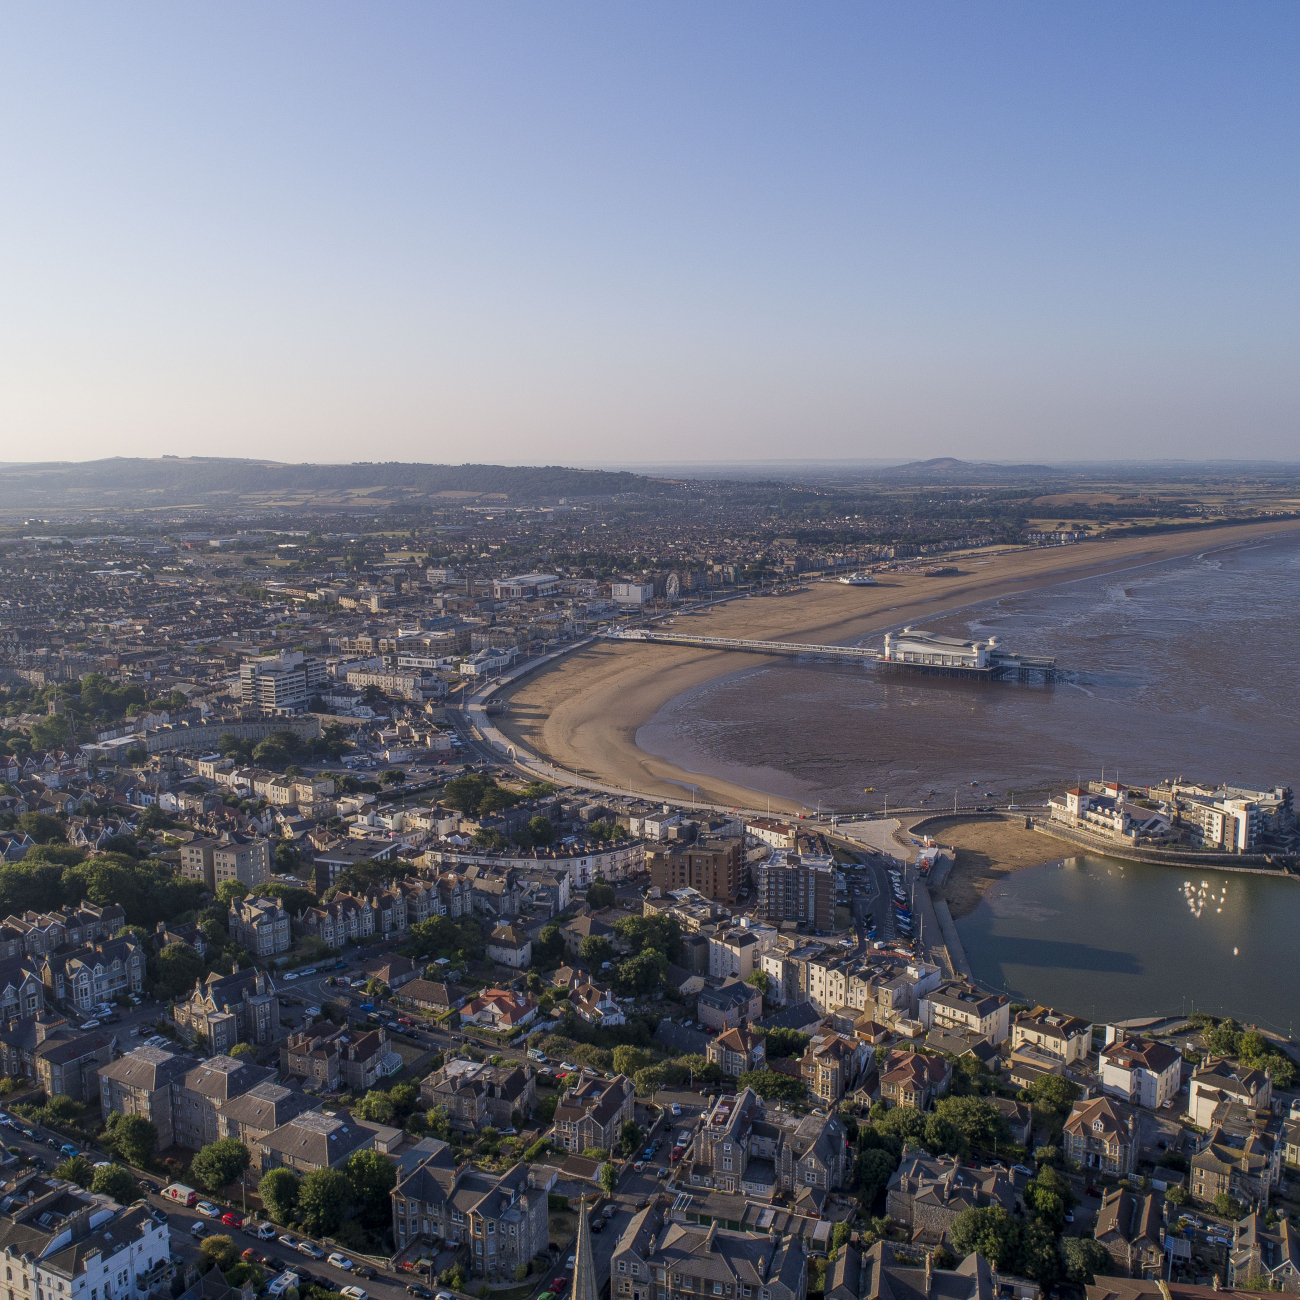 Drone shot of seaside town Weston-super-Mare